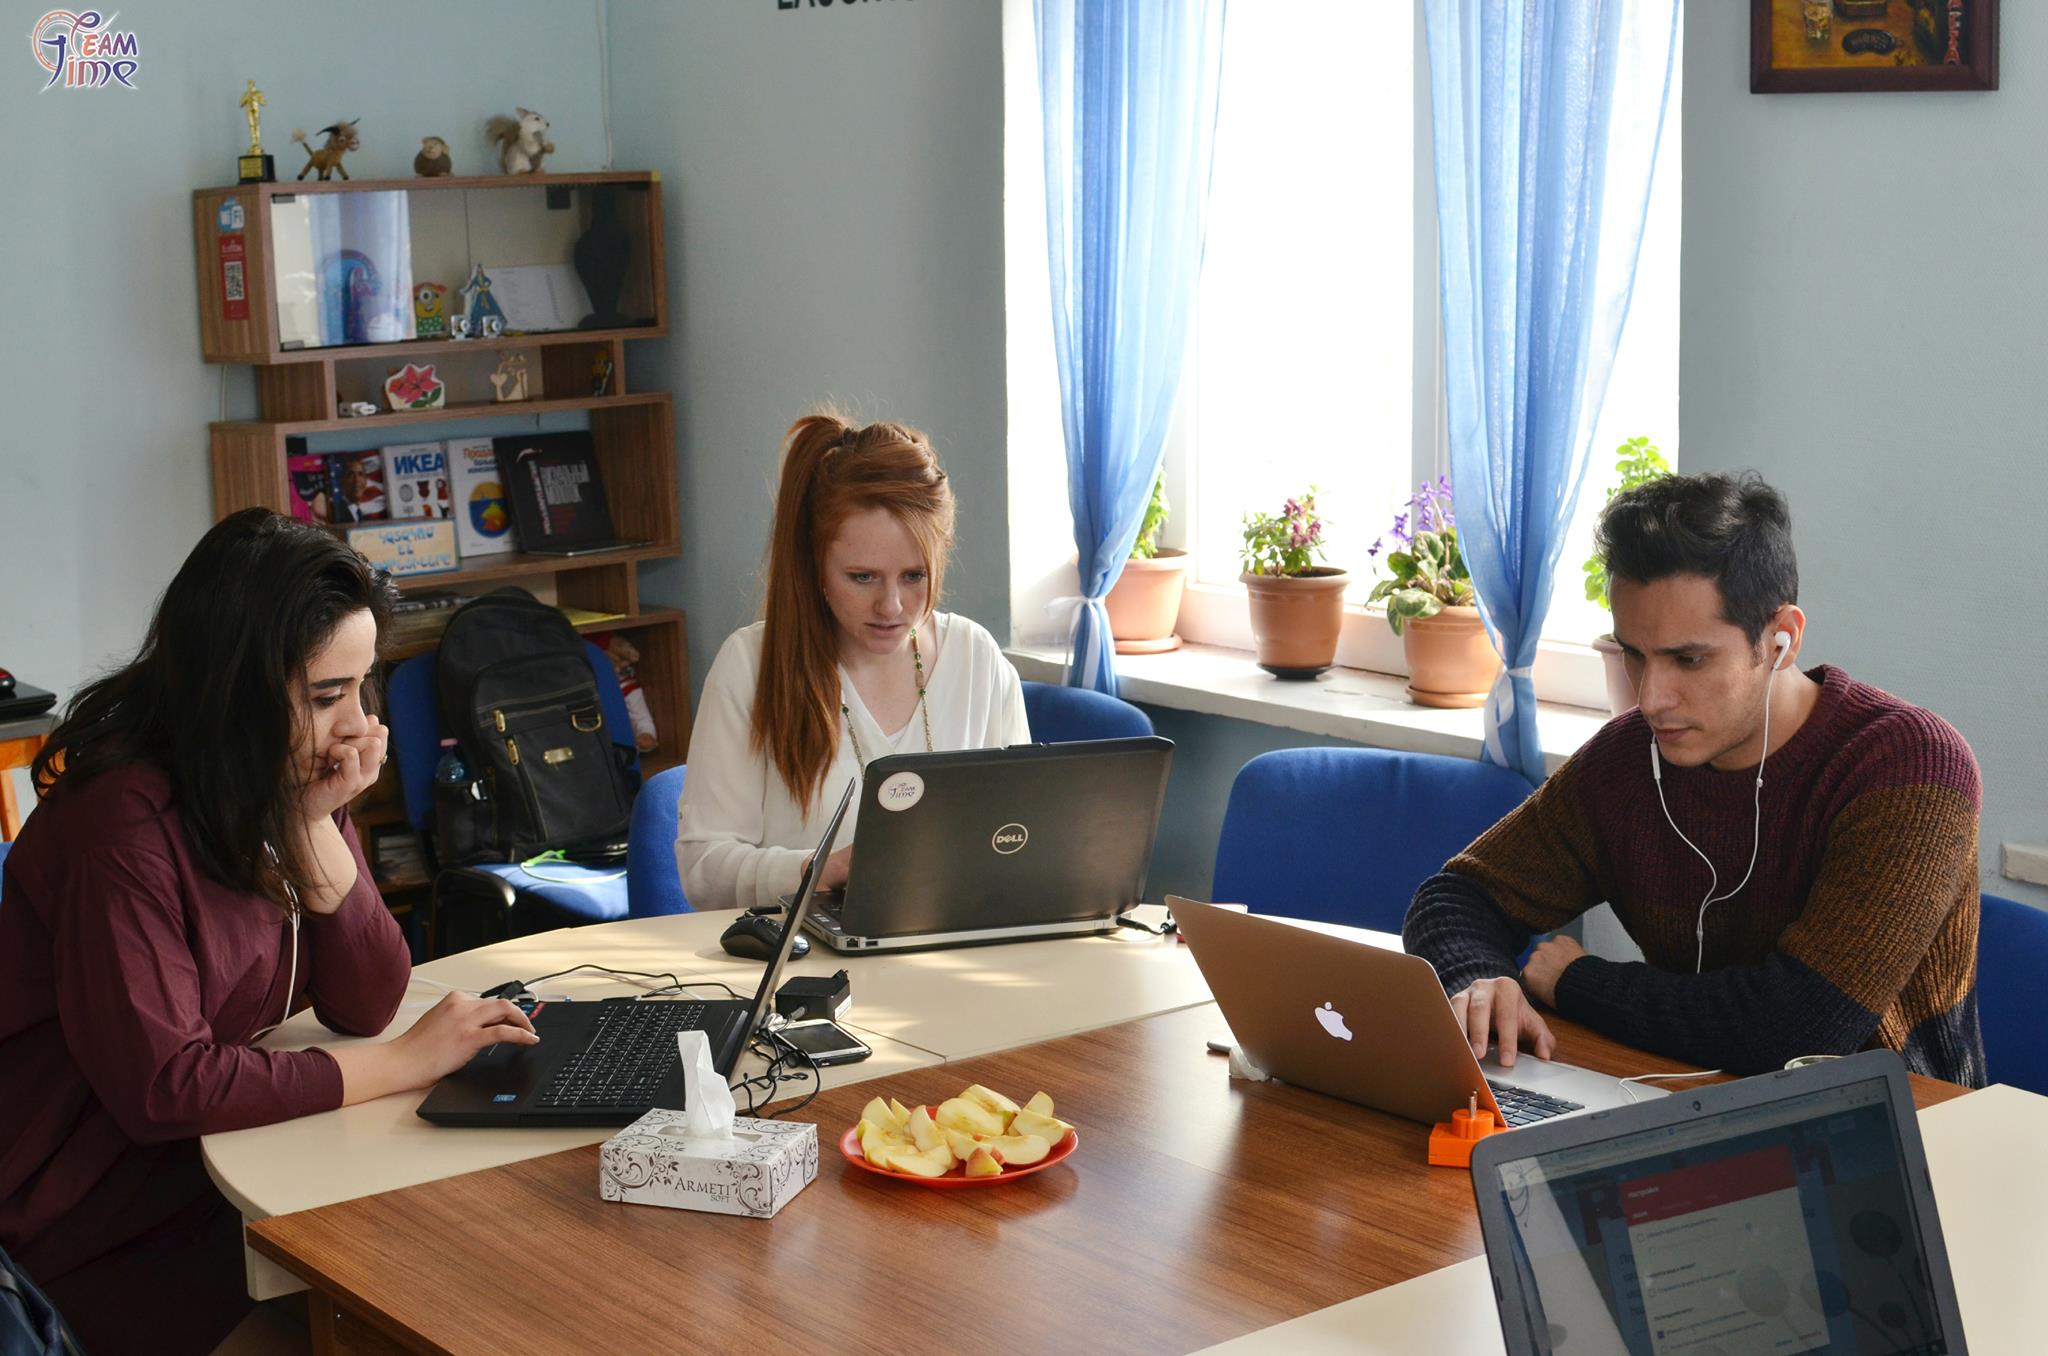 Team Time coworking in Yerevan